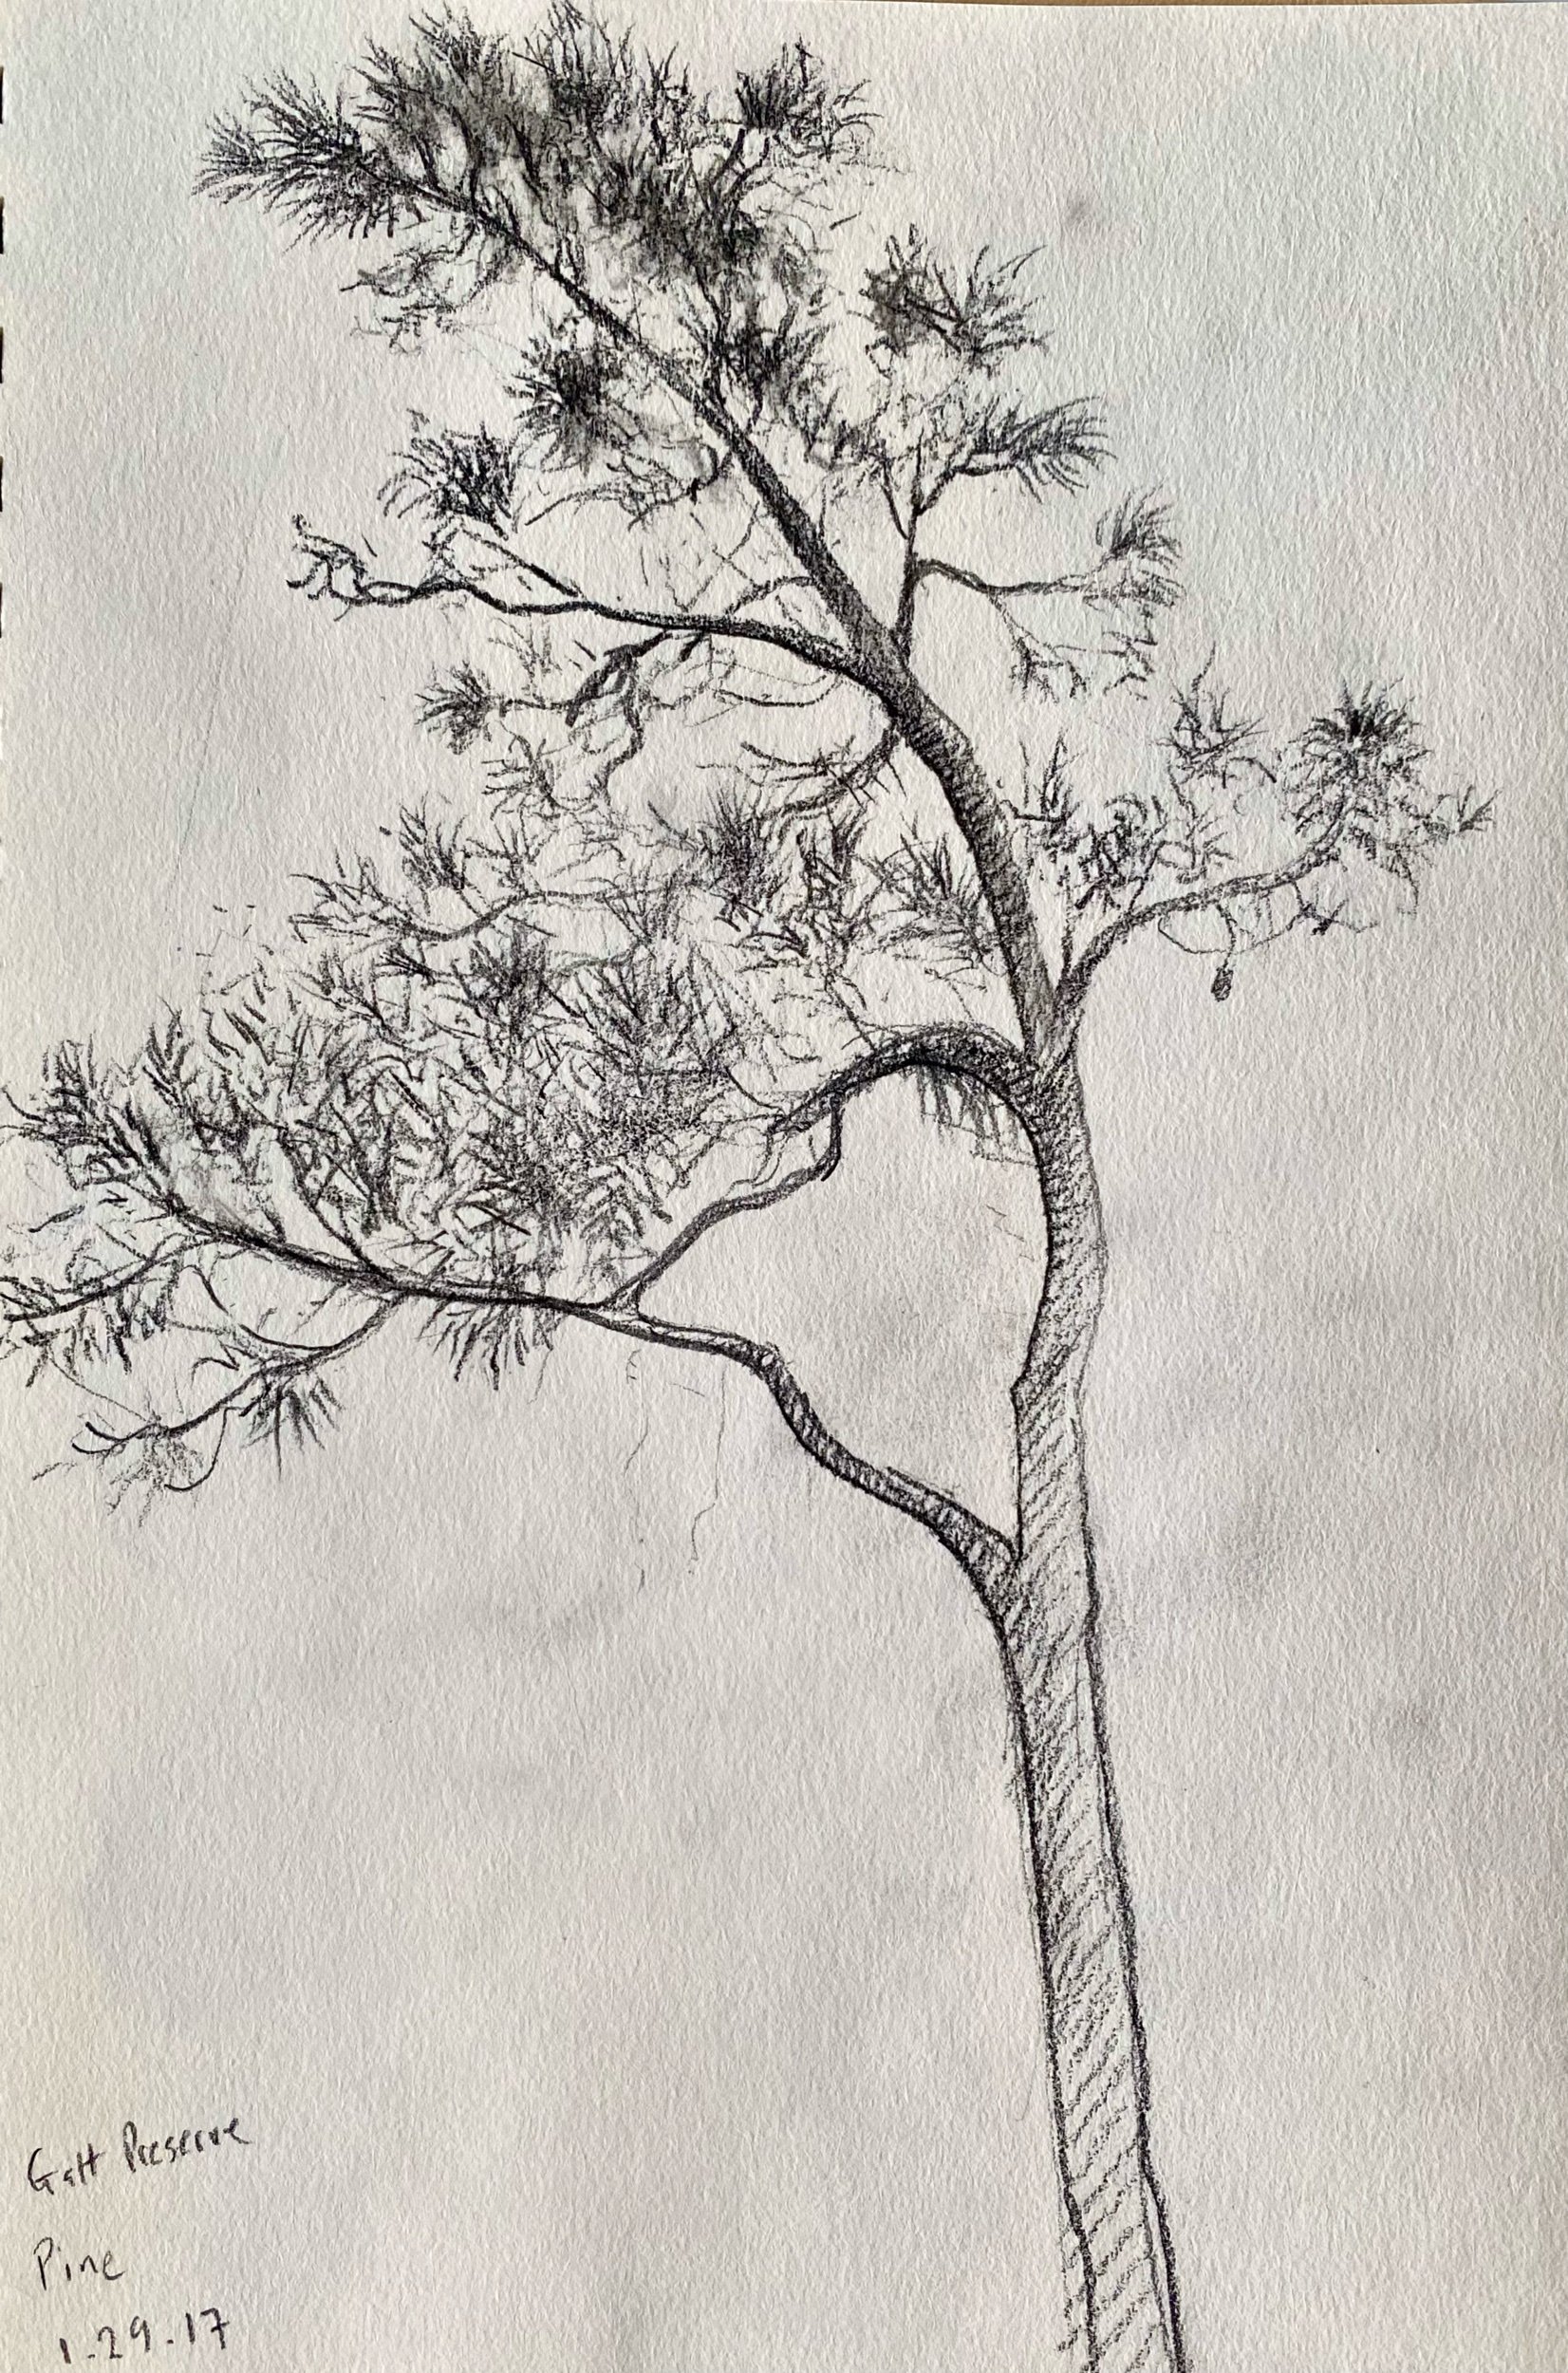 Pine Tree in Galt Preserve, Pine Island, Florida